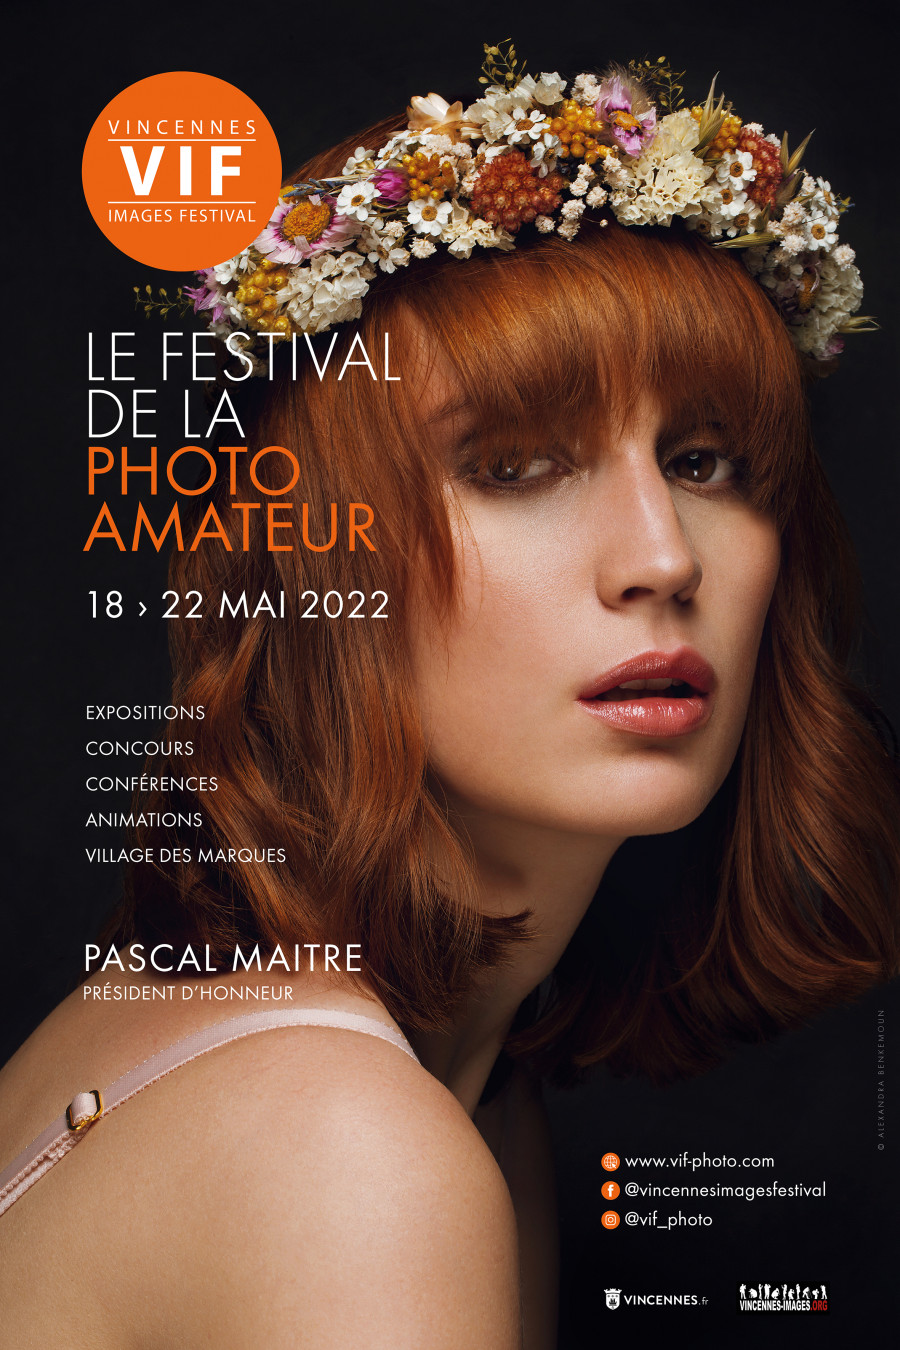 Vincennes images Festival